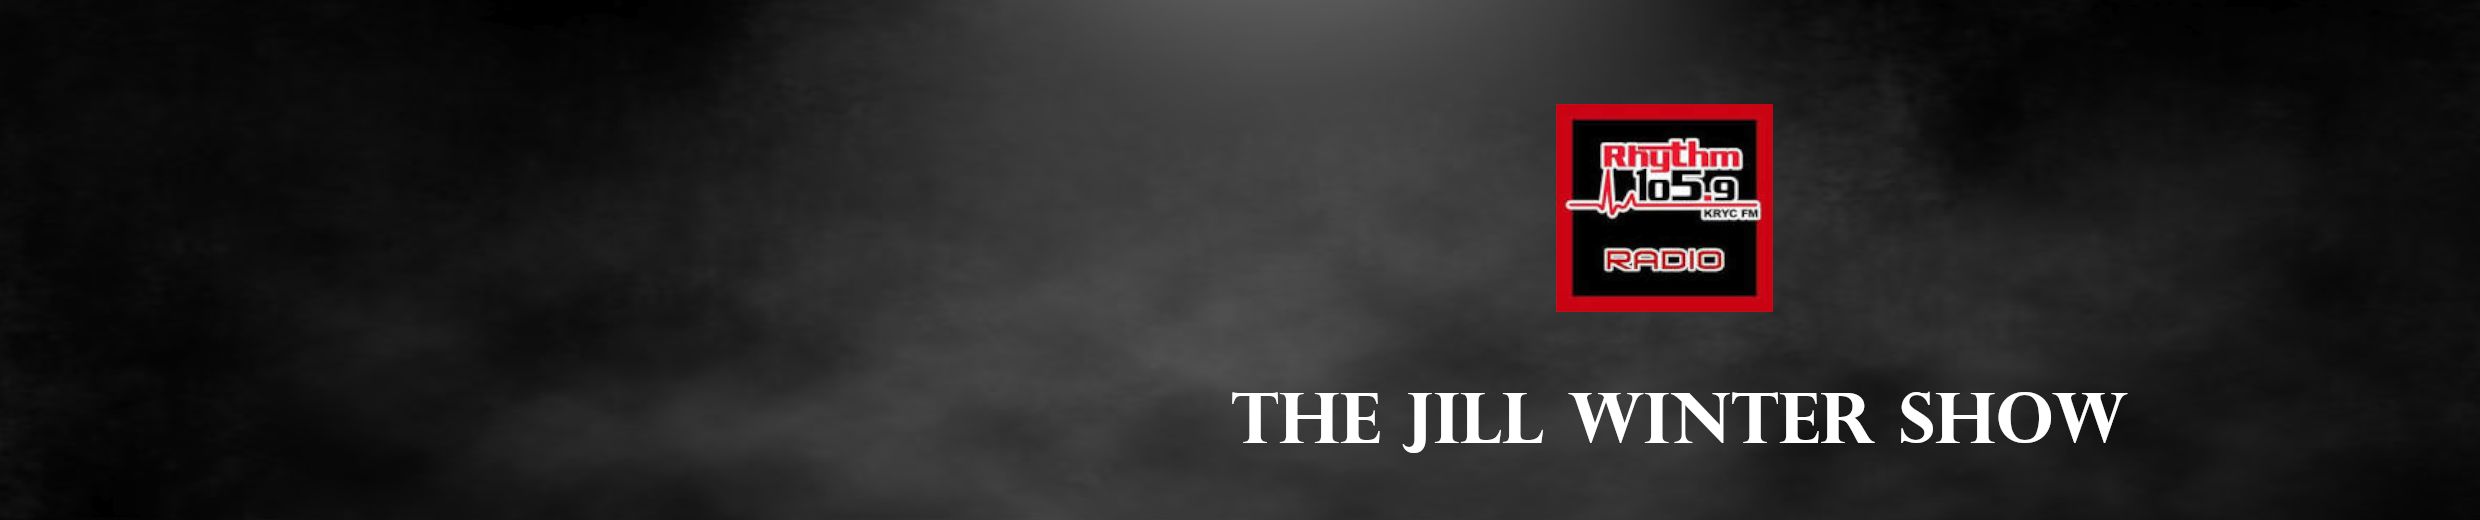 Stream The Jill Winter Show - On Rhythm 105.9 FM June 11 2020 (The Weeknd)  by Jill Winter Rhythm 1059FM